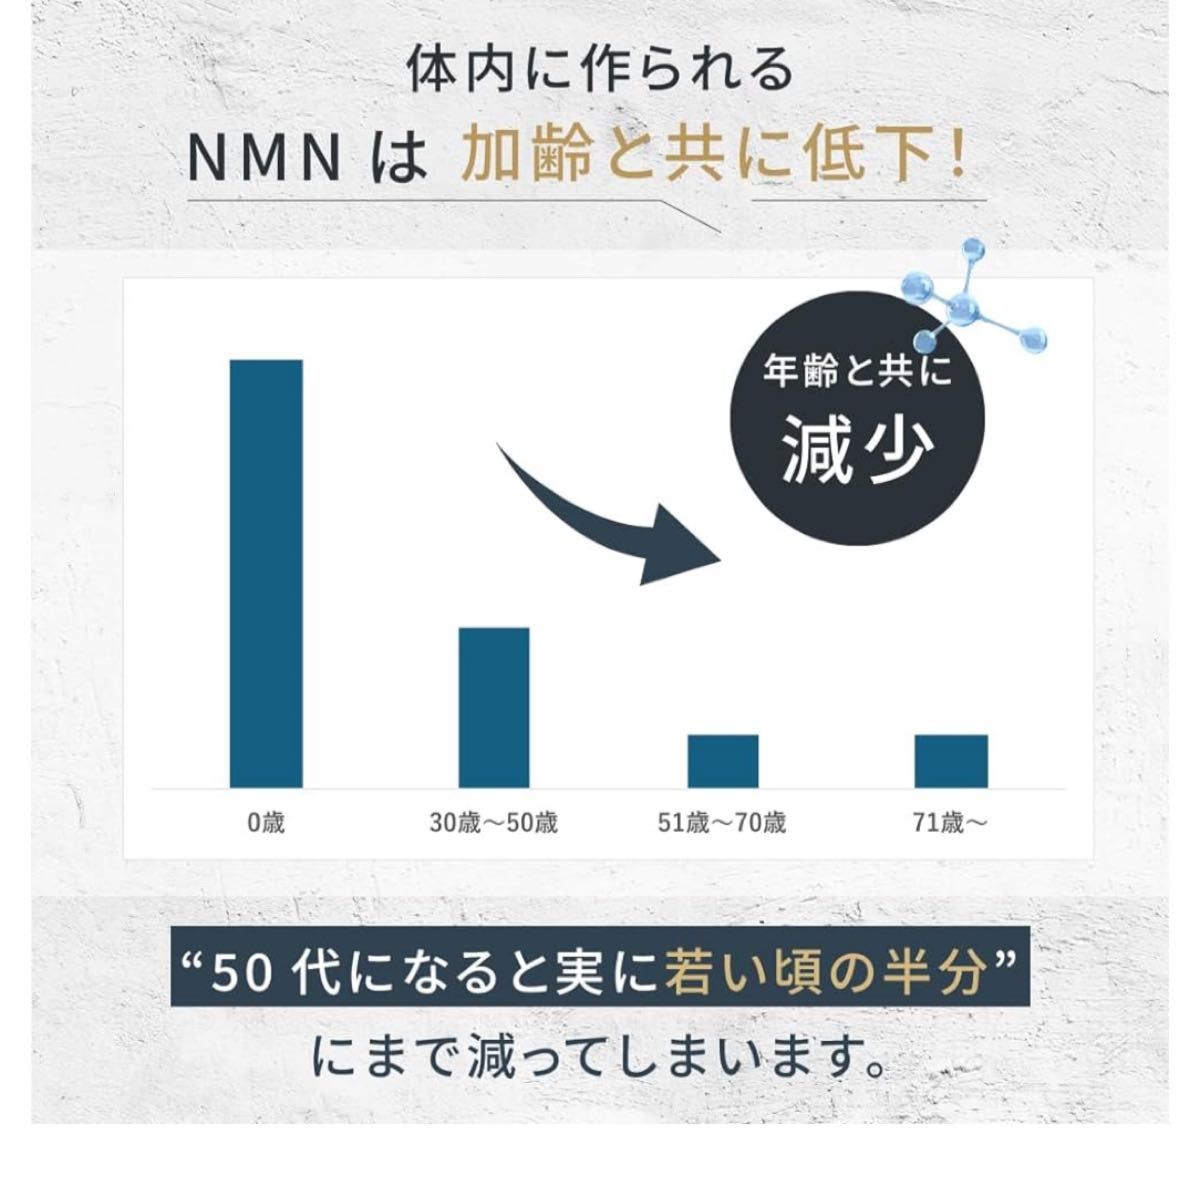 KITEN NMN サプリメント 24000mg ナイアシン 高純度 99.9% 60カプセル 二酸化チタン不使用 リジン 日本製